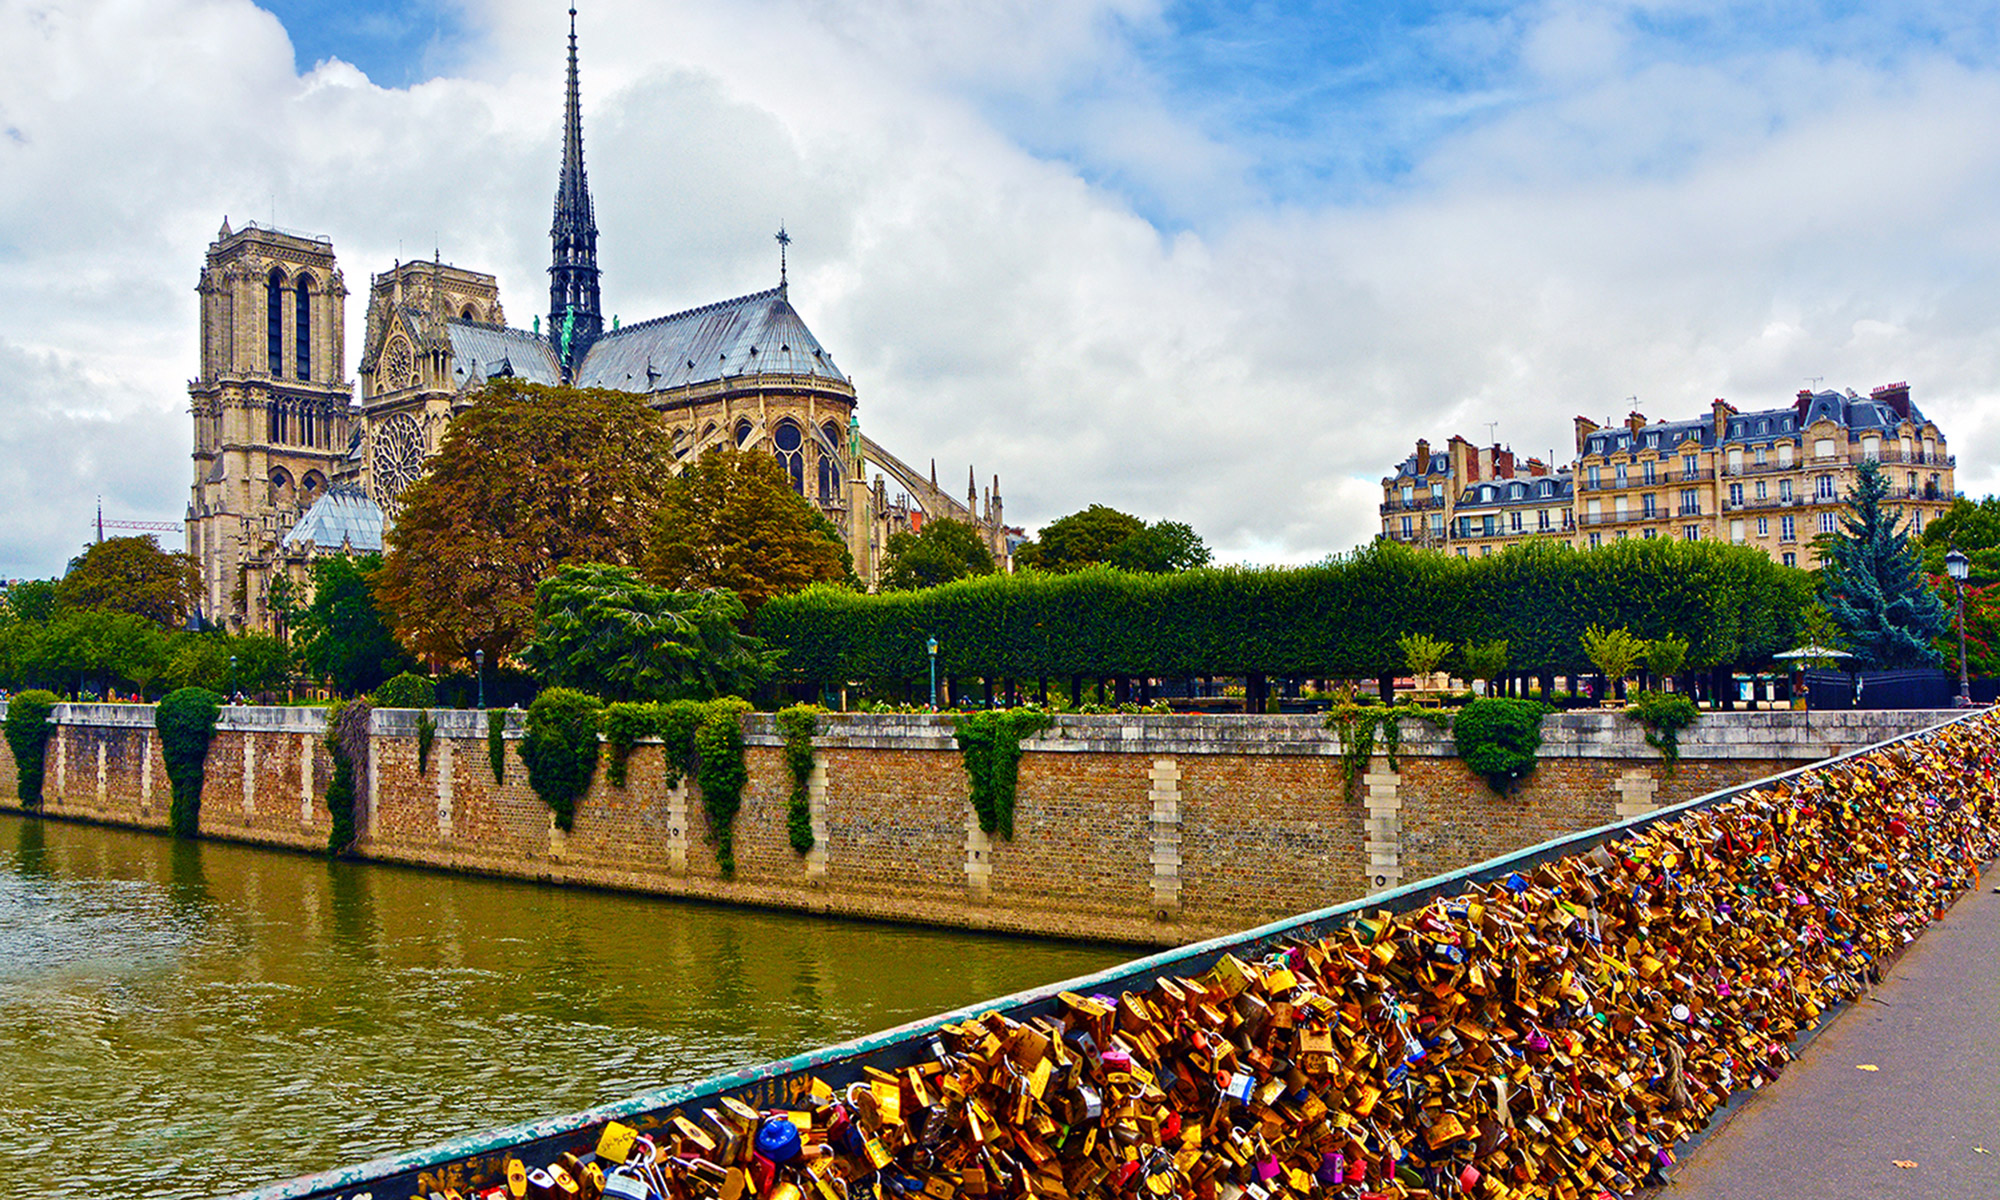 Sips on the Seine – a Romantic Honeymoon Cruise